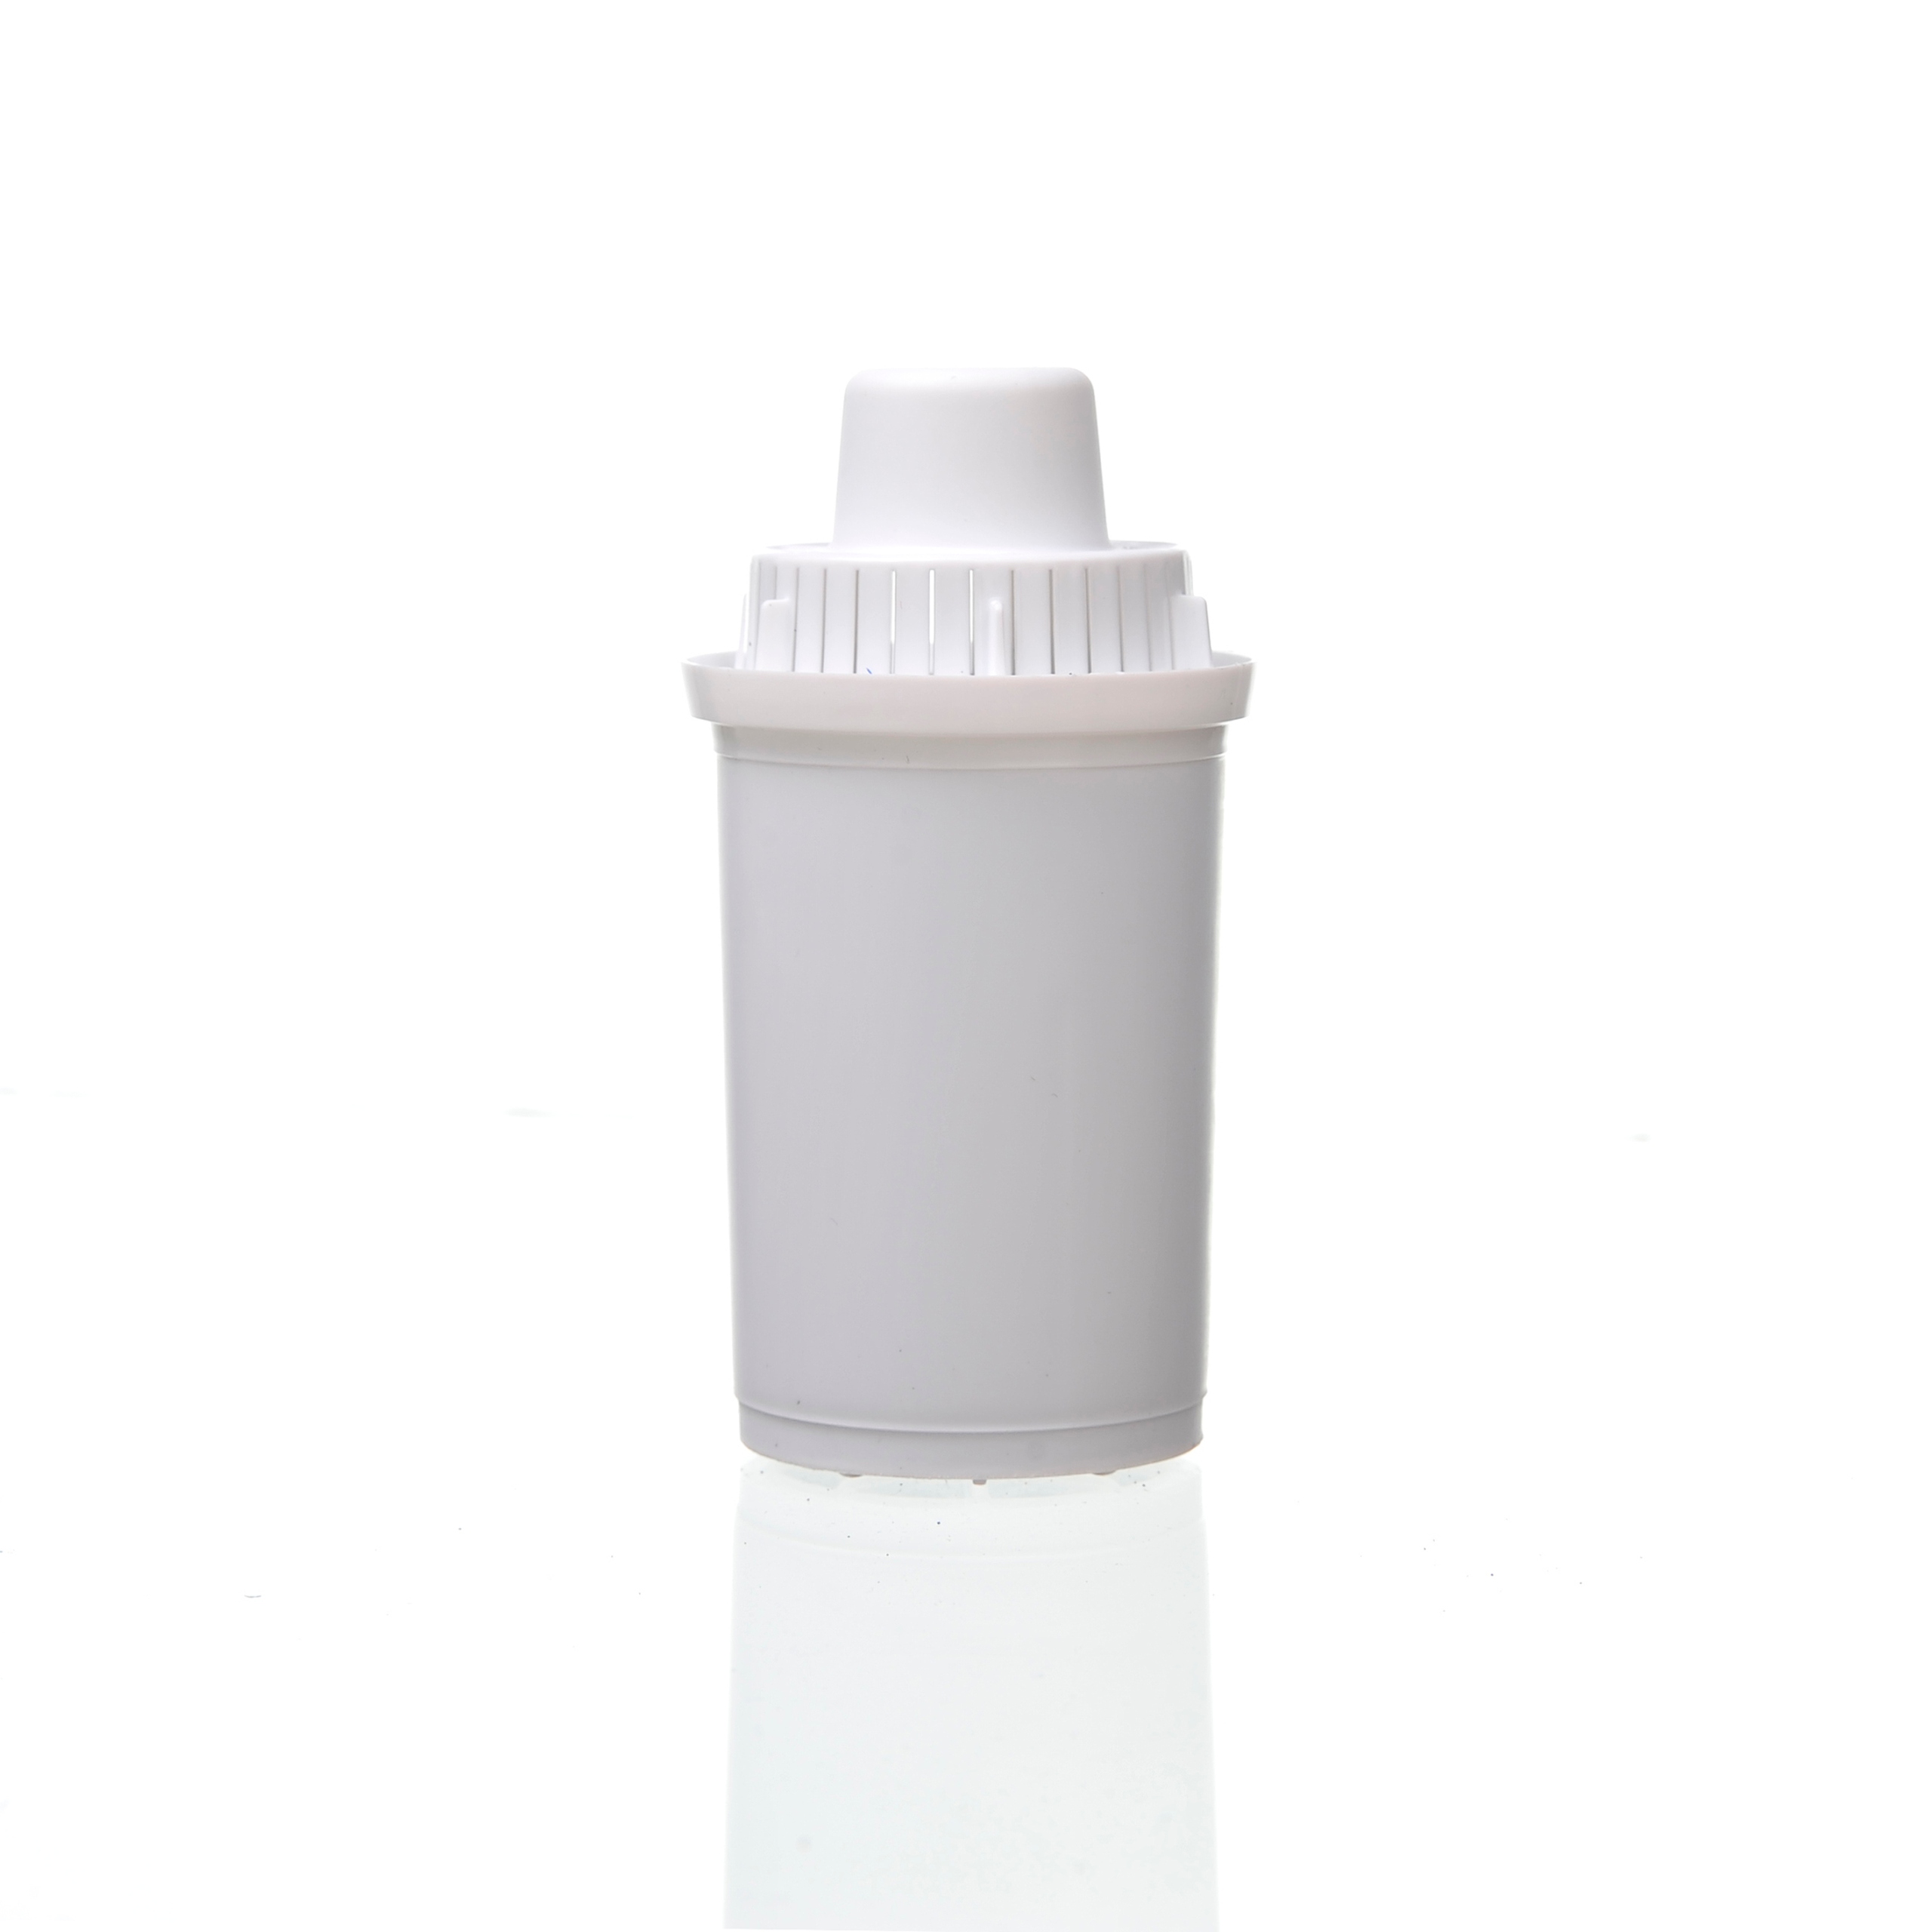 Wkład filtrujący Aquaphor B15 Standard 10 szt. Kod producenta B15